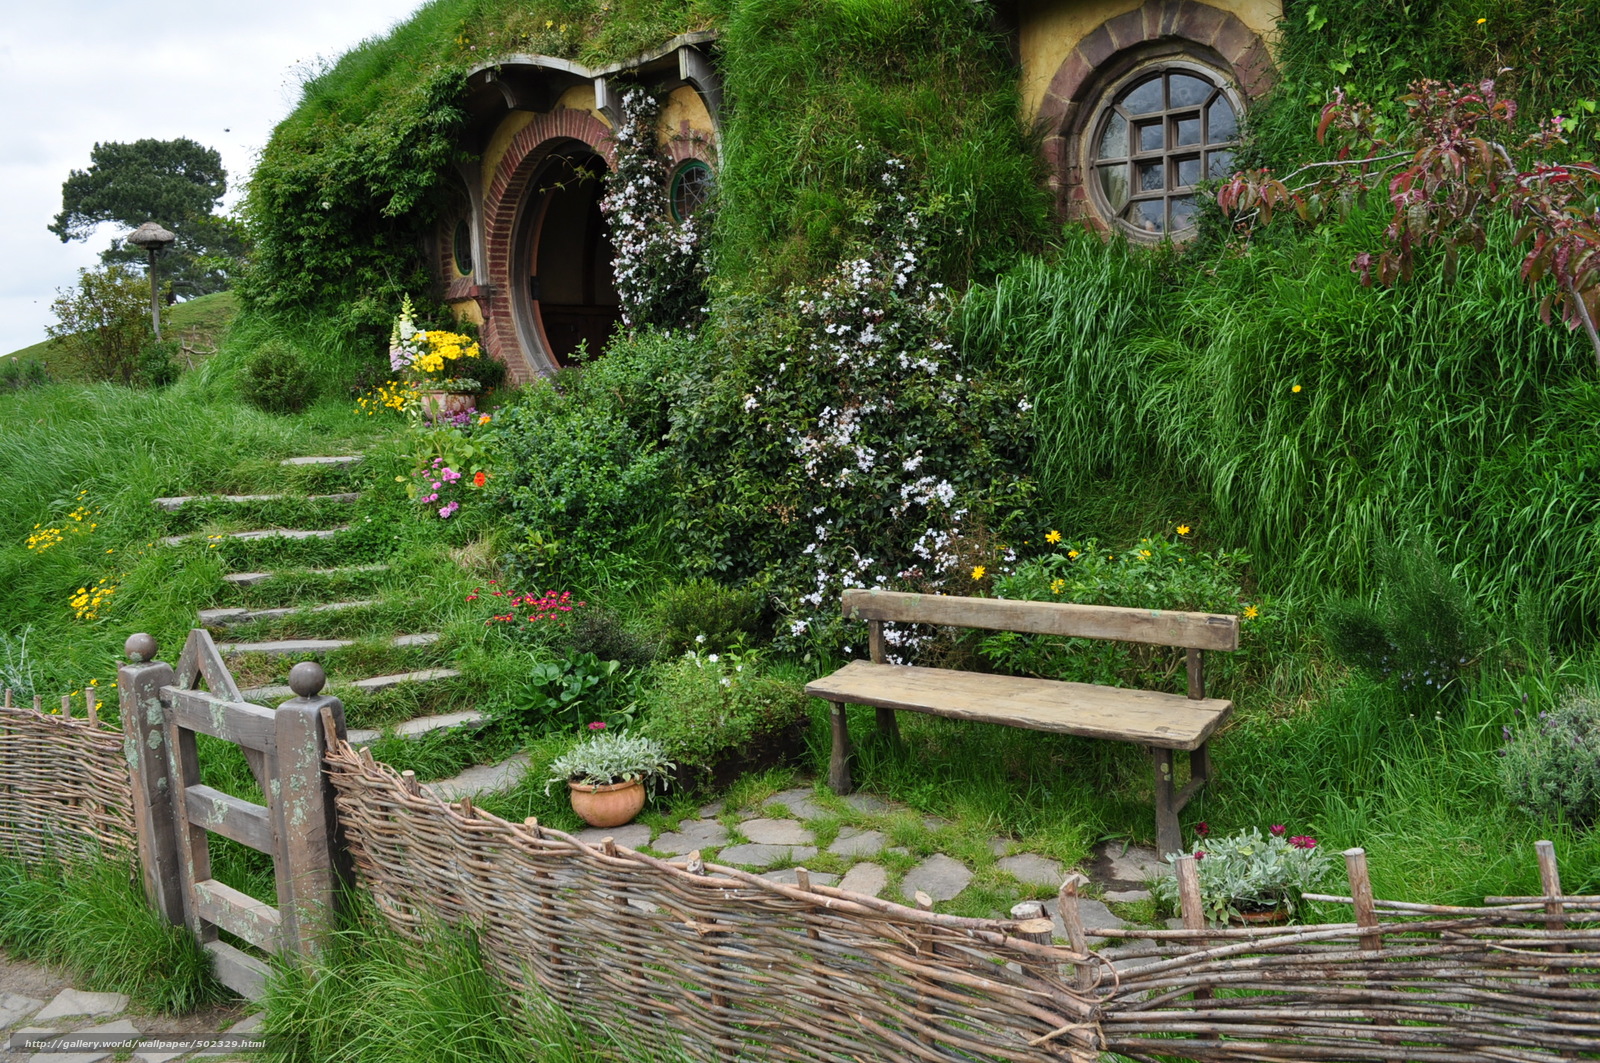 Wallpaper New Zealand Hobbit House Landscape Desktop